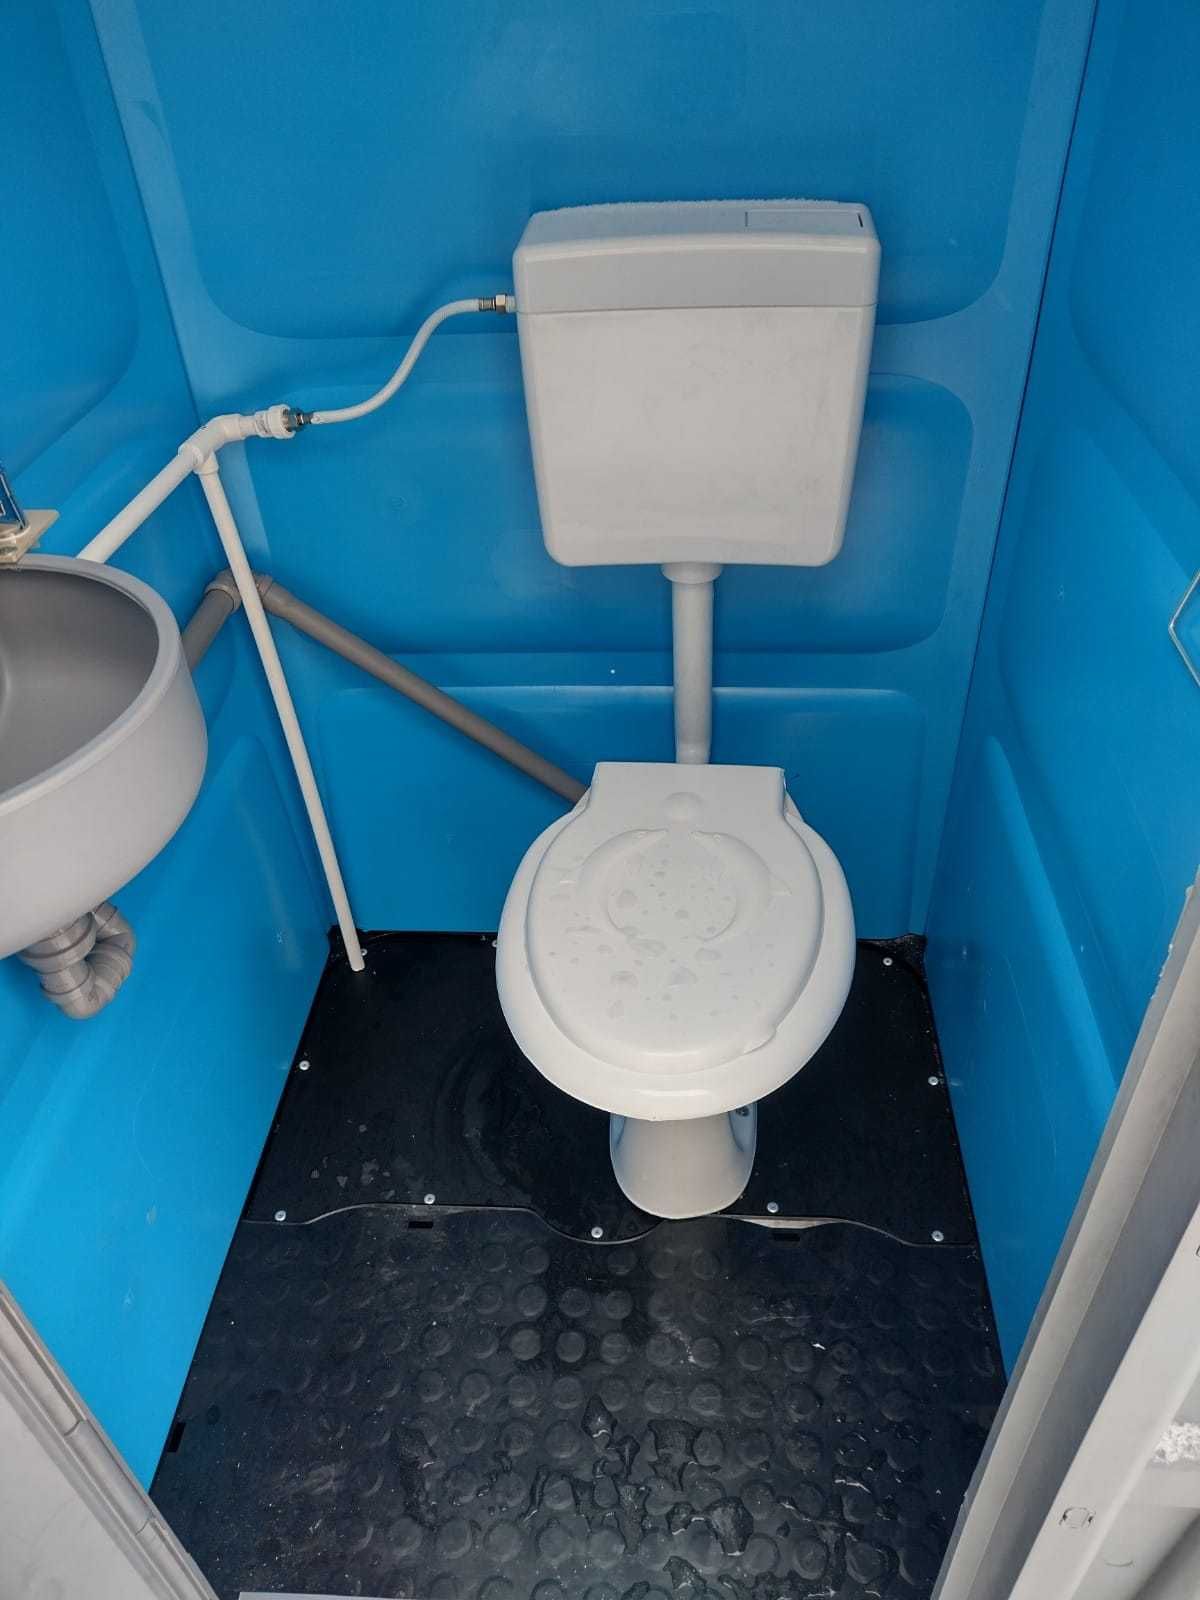 WC toalete plastic vidanjabile/racordabile la apa canal